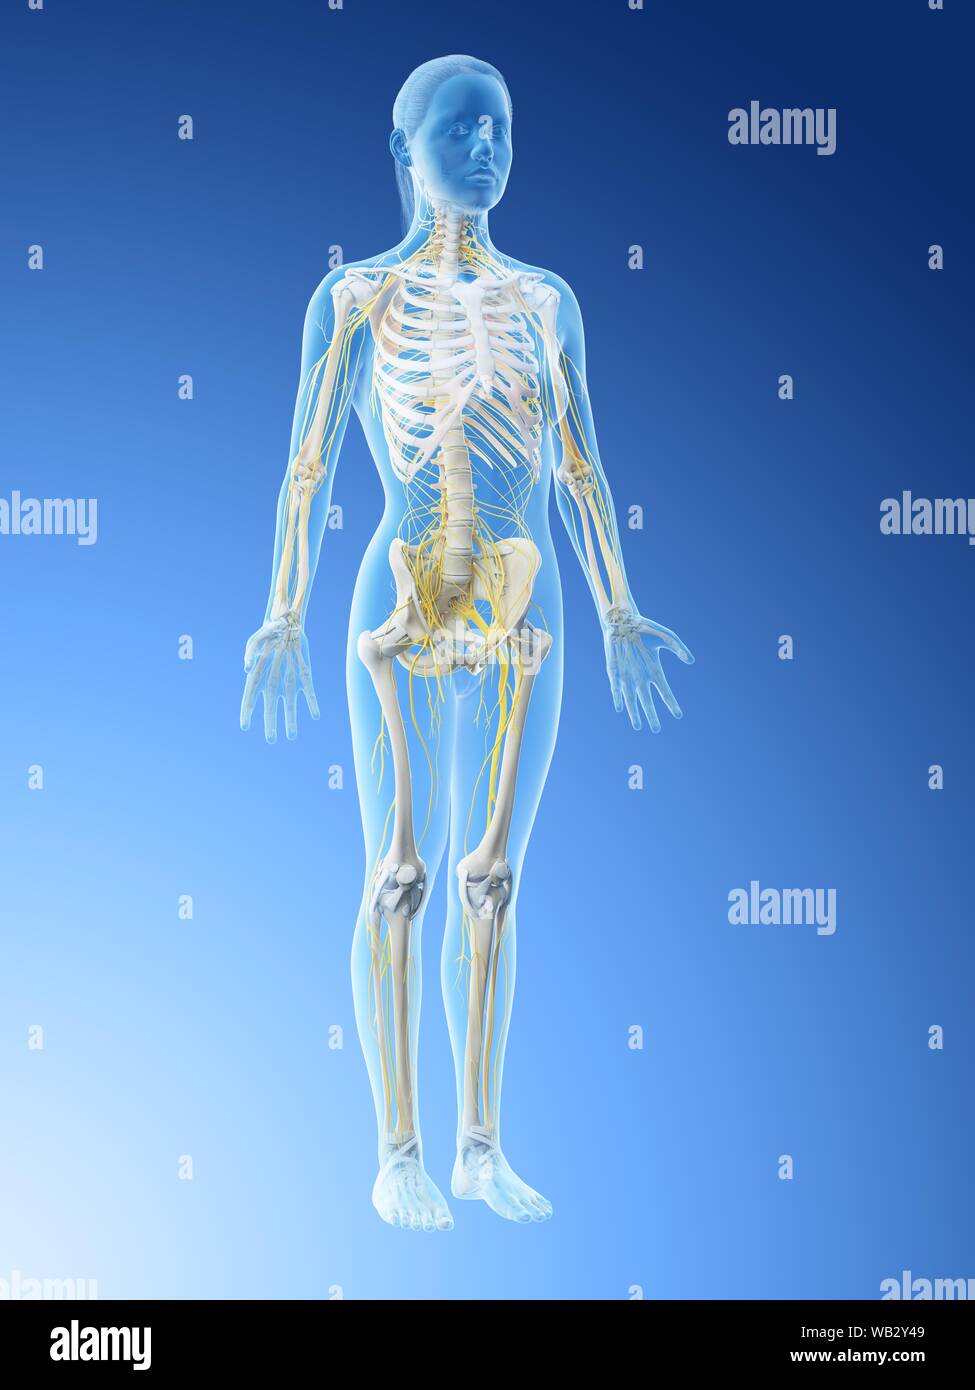 Female nervous system, computer illustration Stock Photo - Alamy